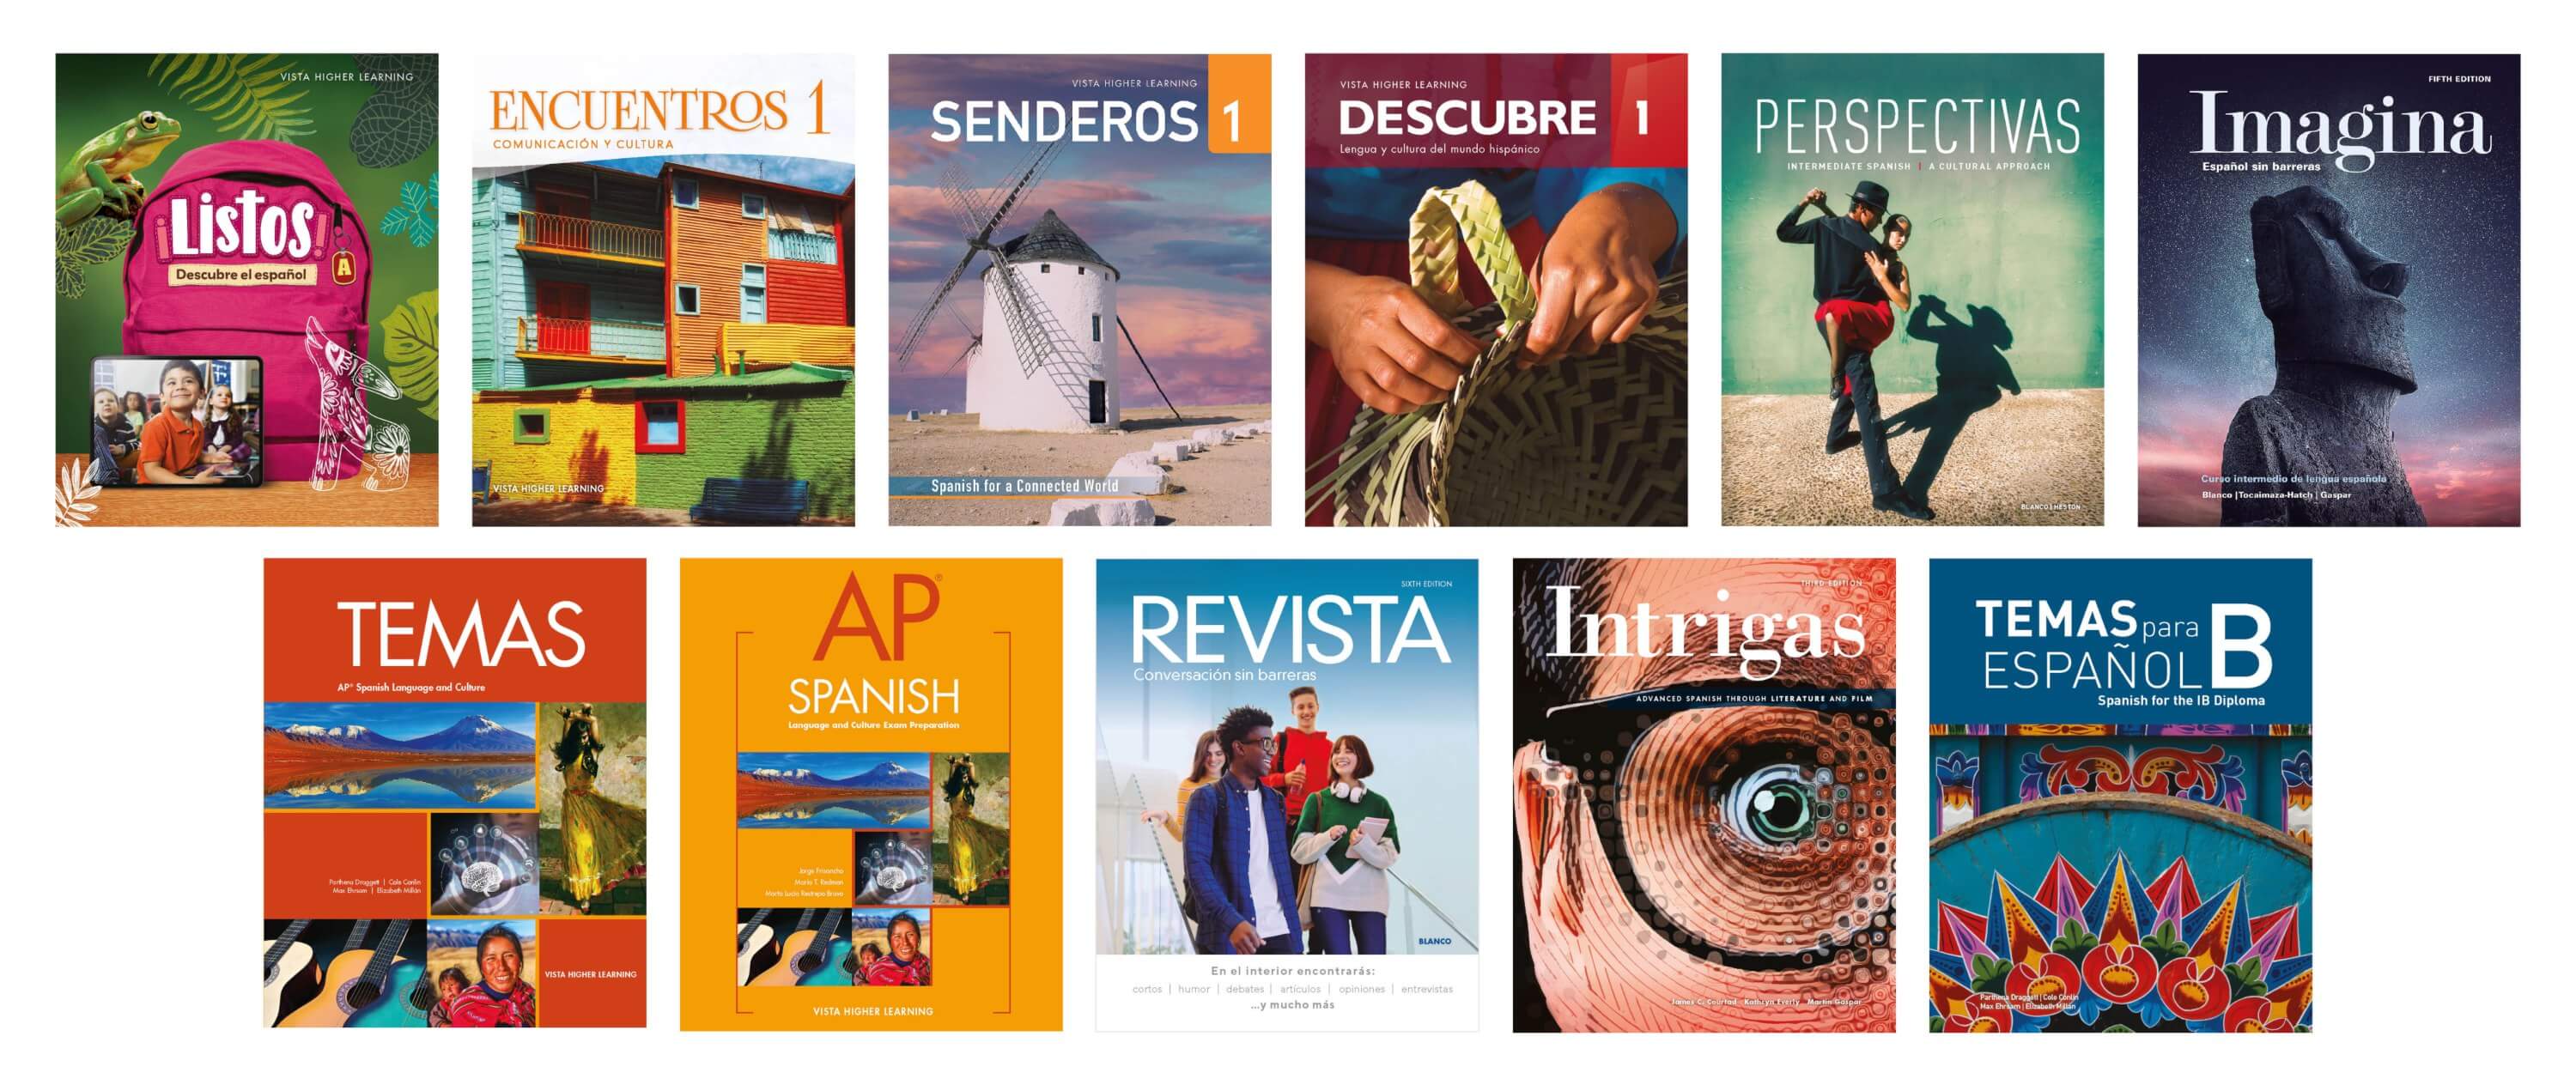 Vista world language  Spanish textbook covers